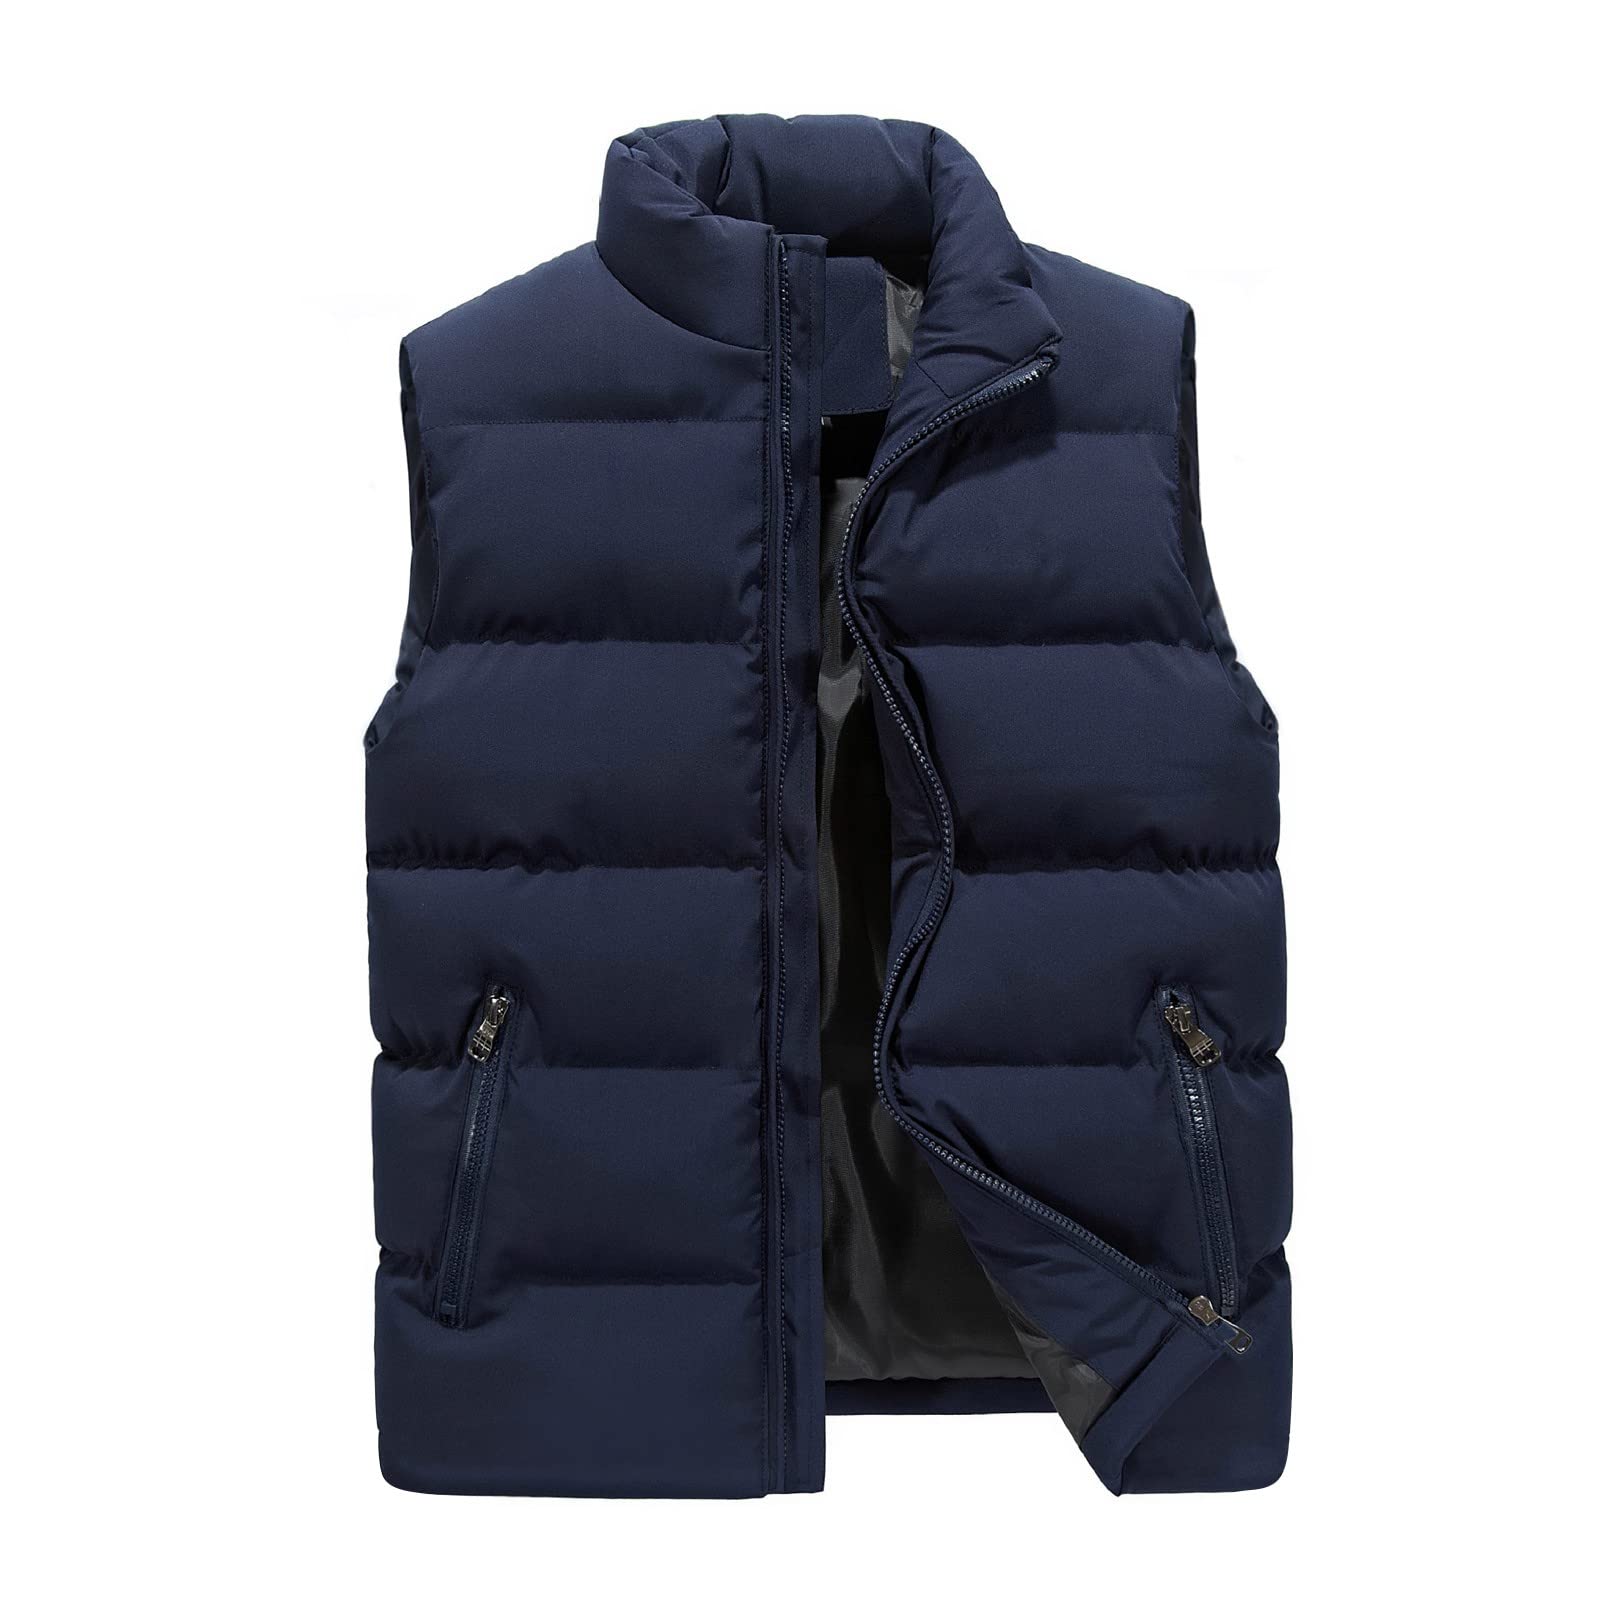 XIAXOGOOL Sweat Vest For Men,Men's Winter Padded Puffer Vest Outdoor Stand Collar Sleeveless Jacket Warm Quilted Waistcoat